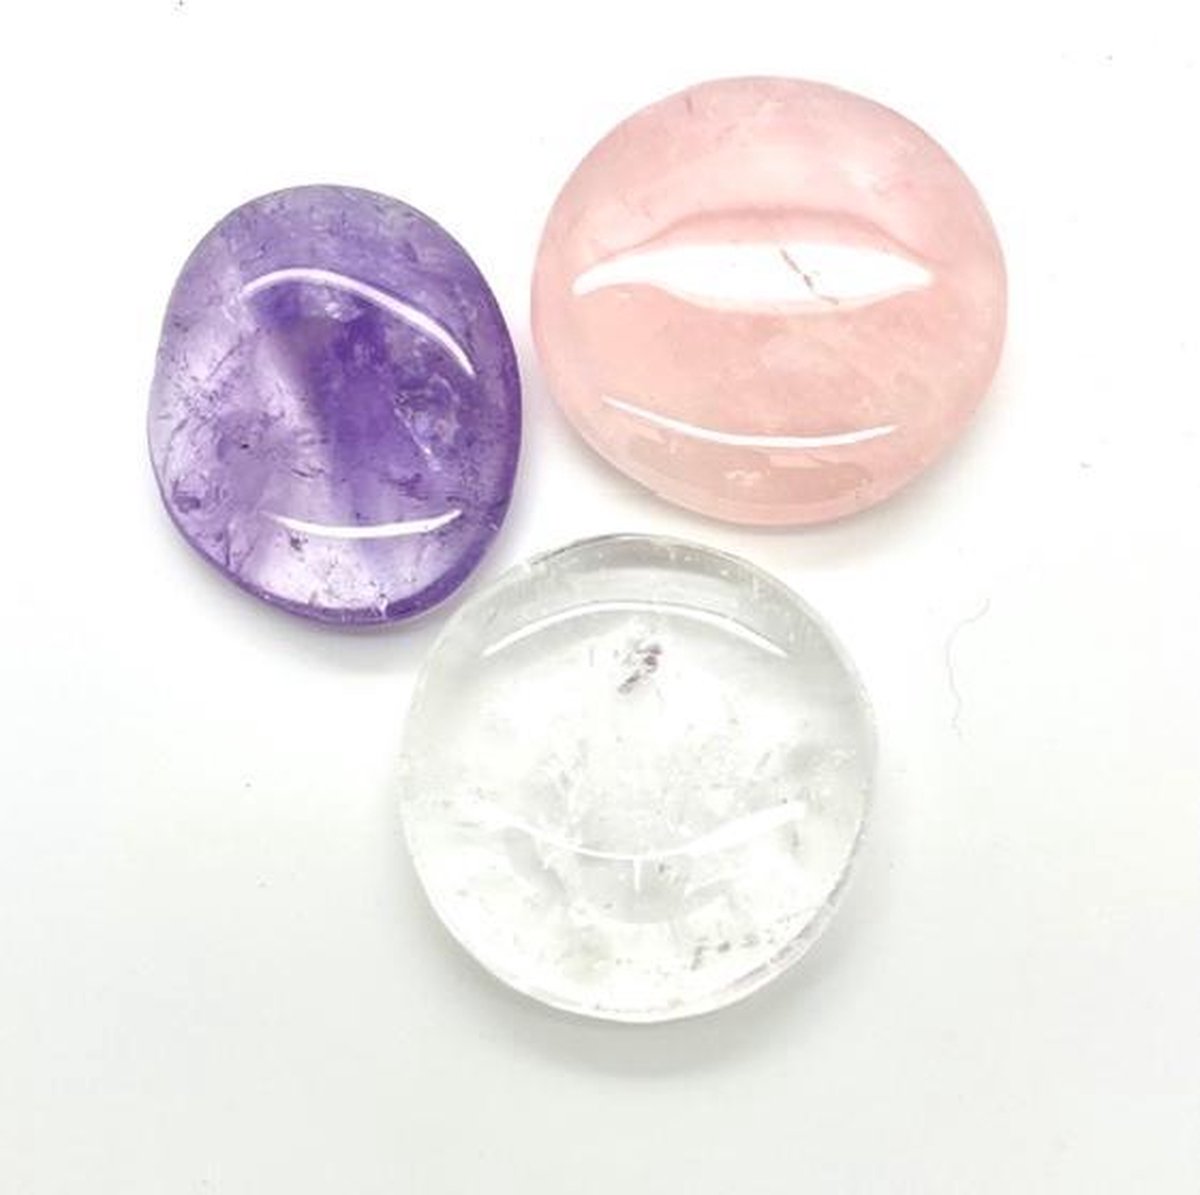 Drie eenheid/ gouden driehoek edelstenen zak/ massage stenen amethist bergkristal en rozenkwarts.